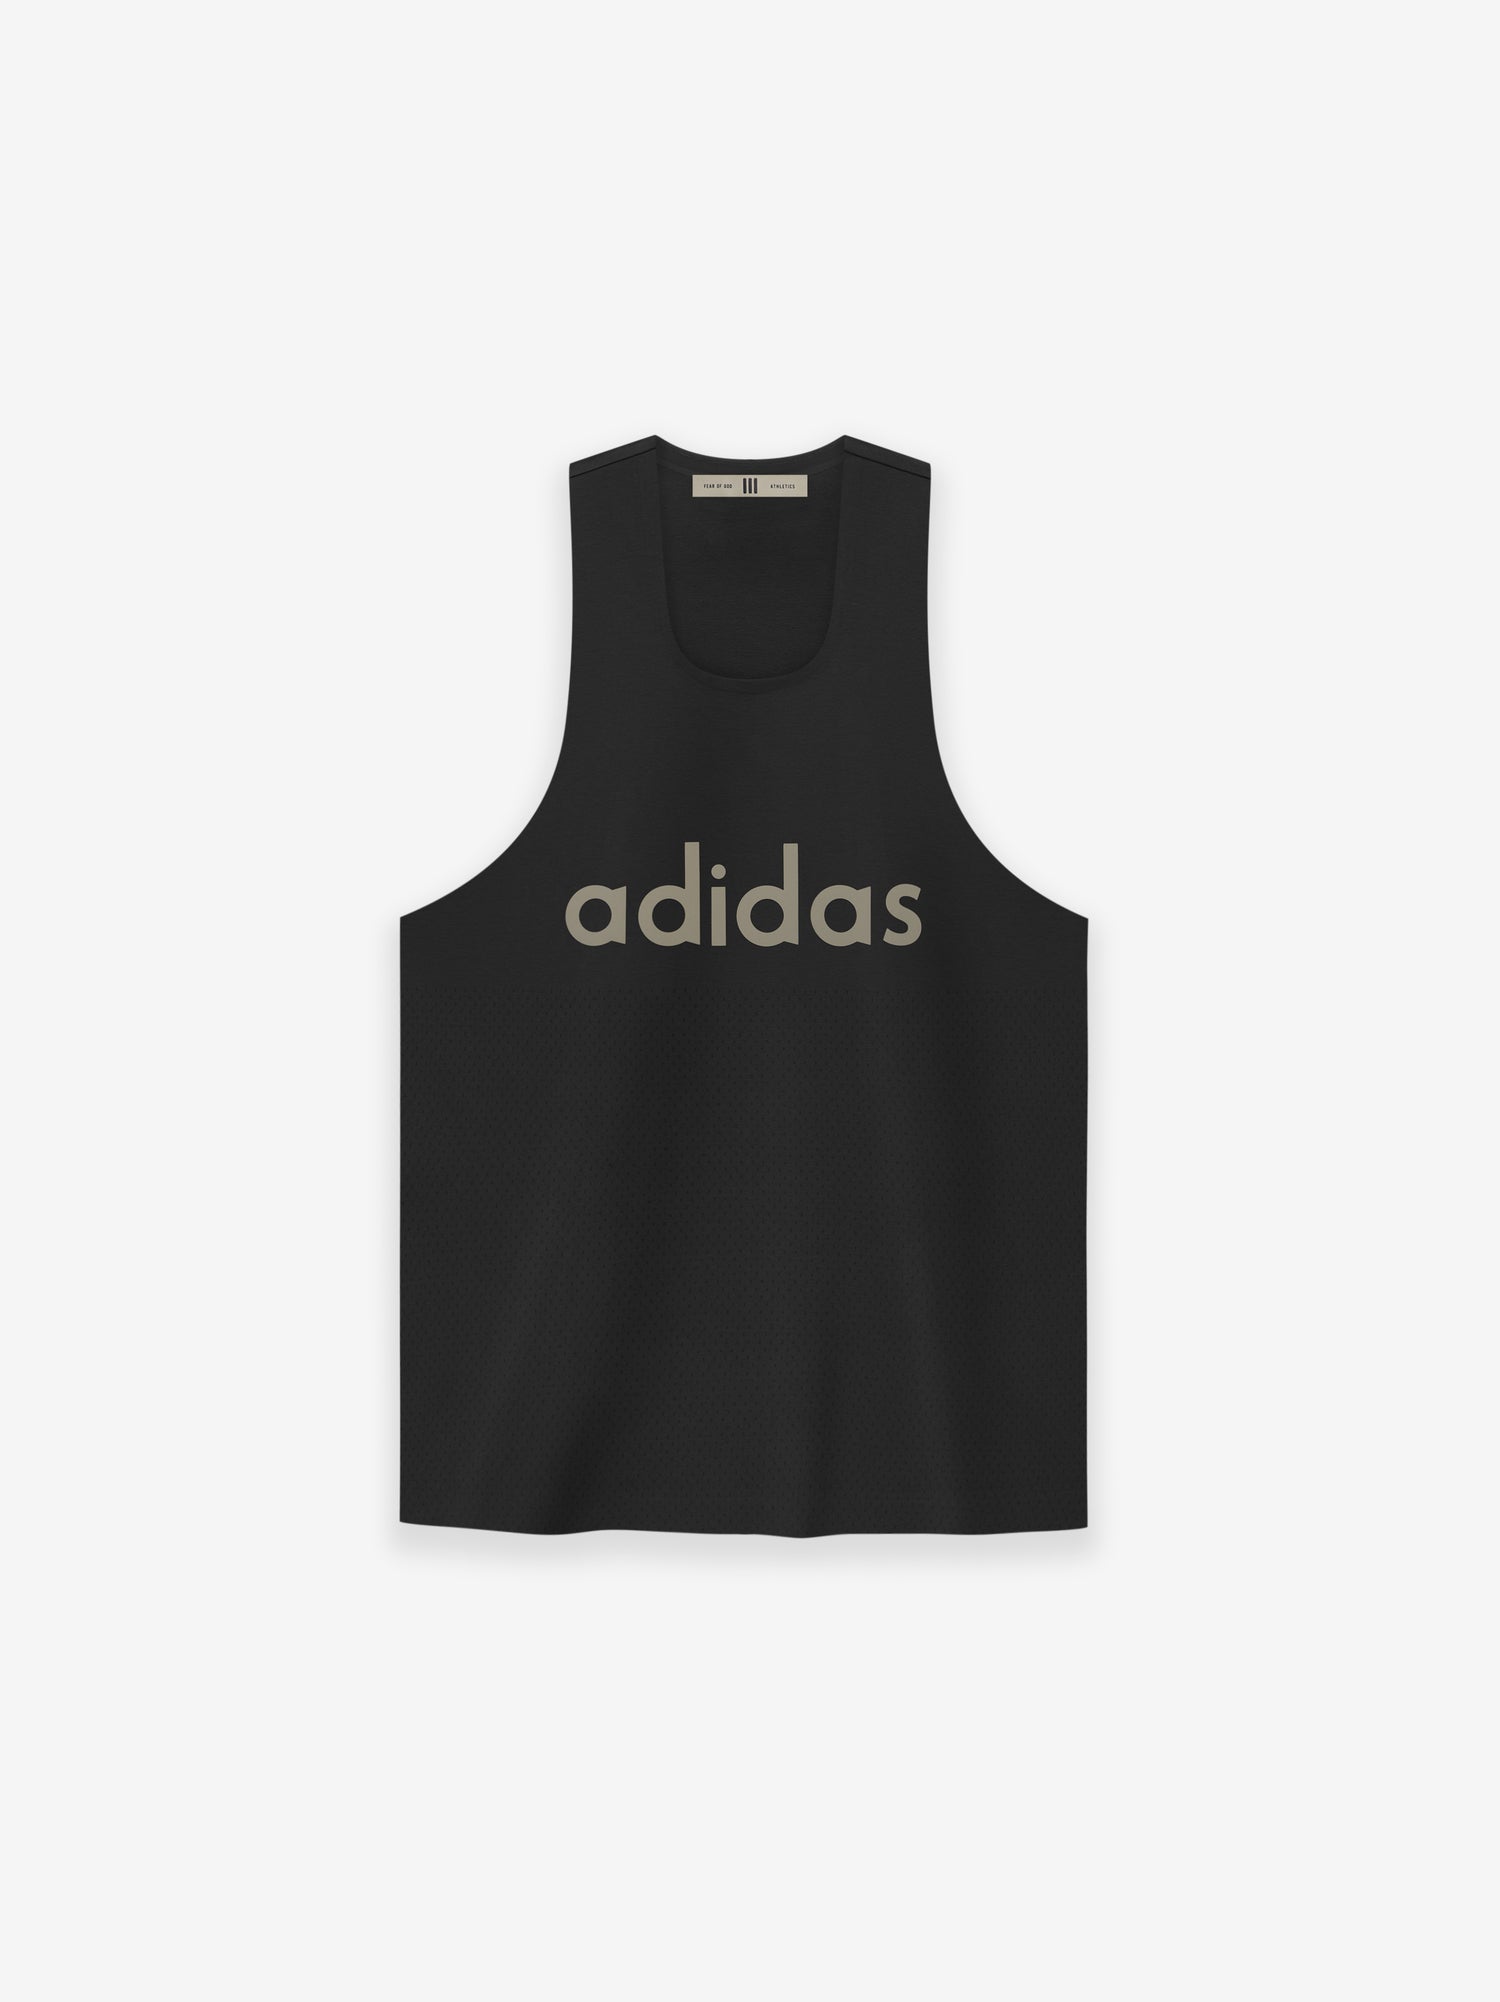 adidas Athletics Tank (Black)